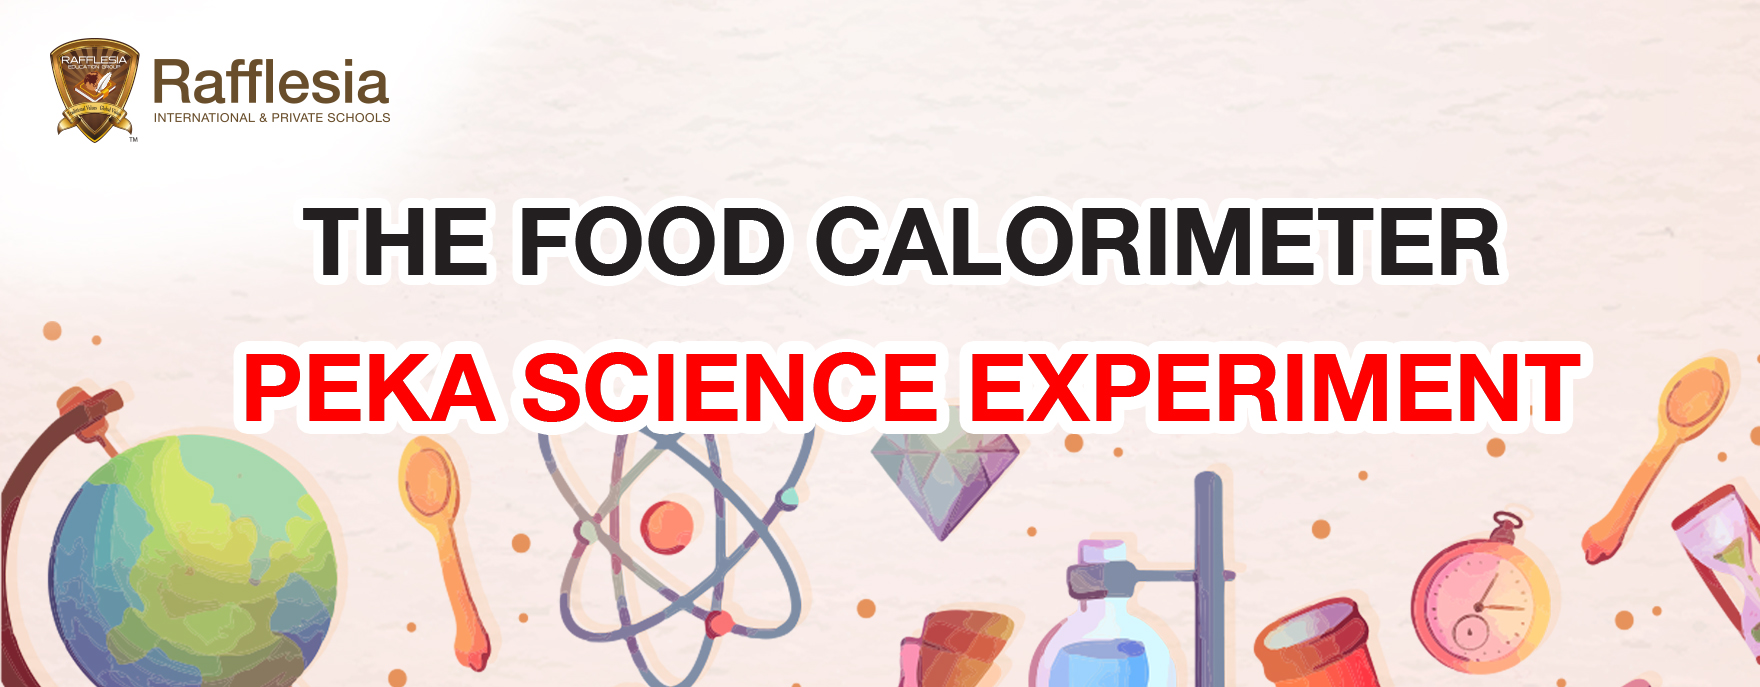 The Food Calorimeter